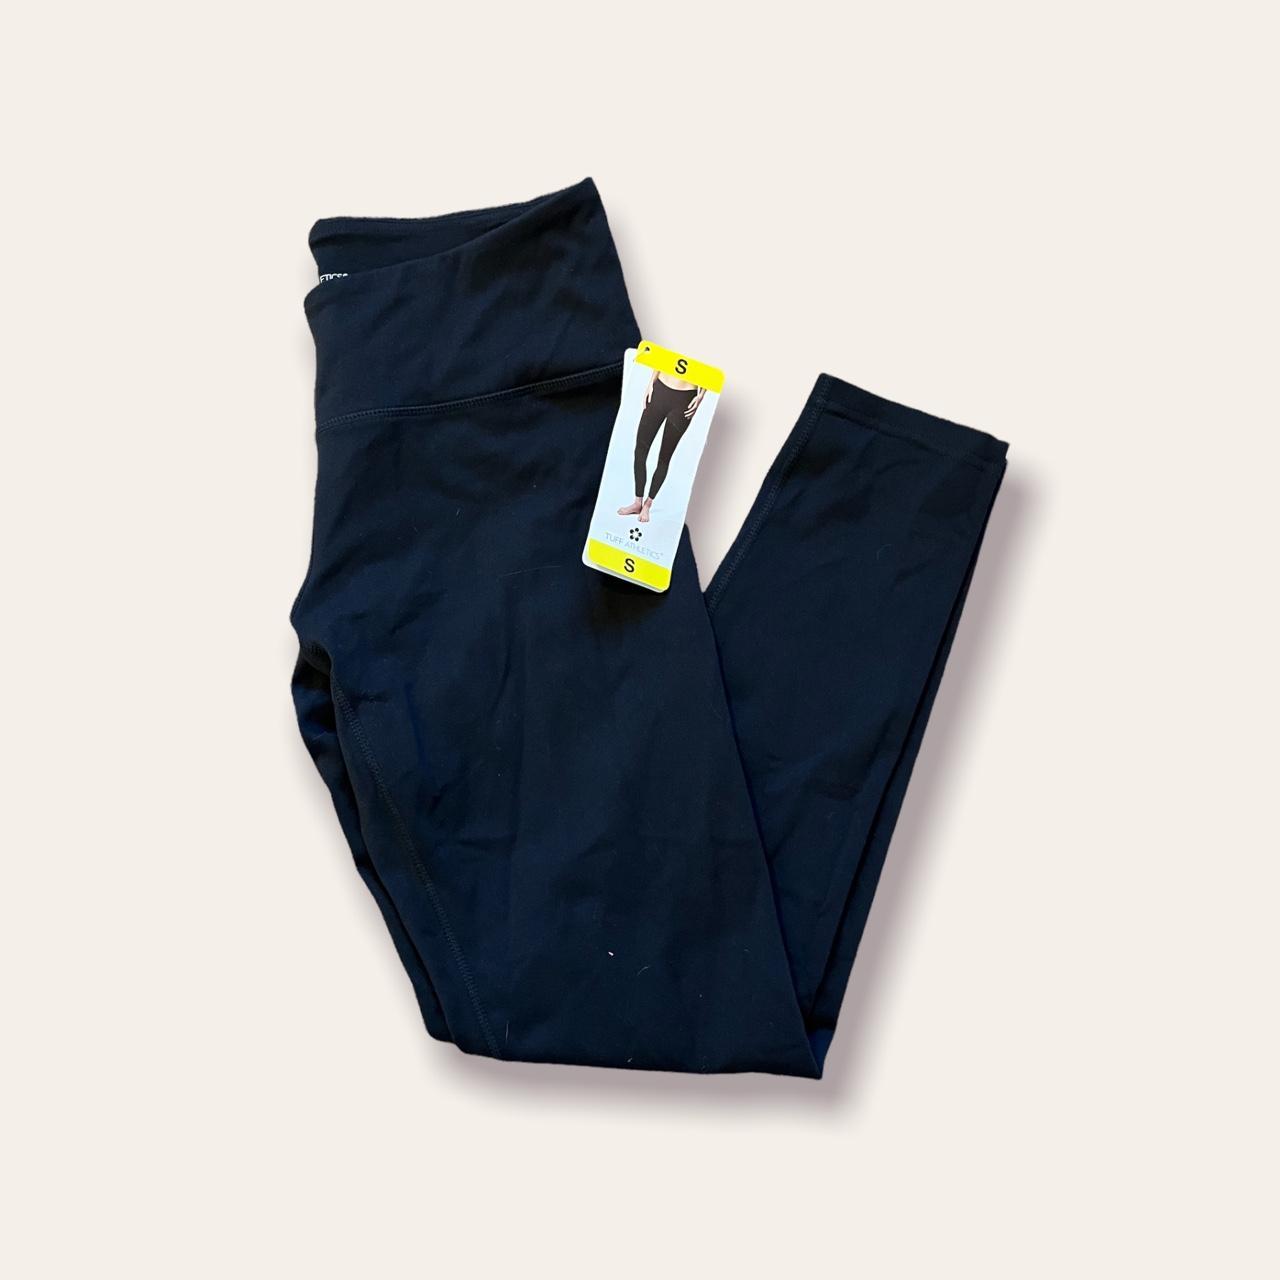 black leggings with zippered small pocket brand: - Depop